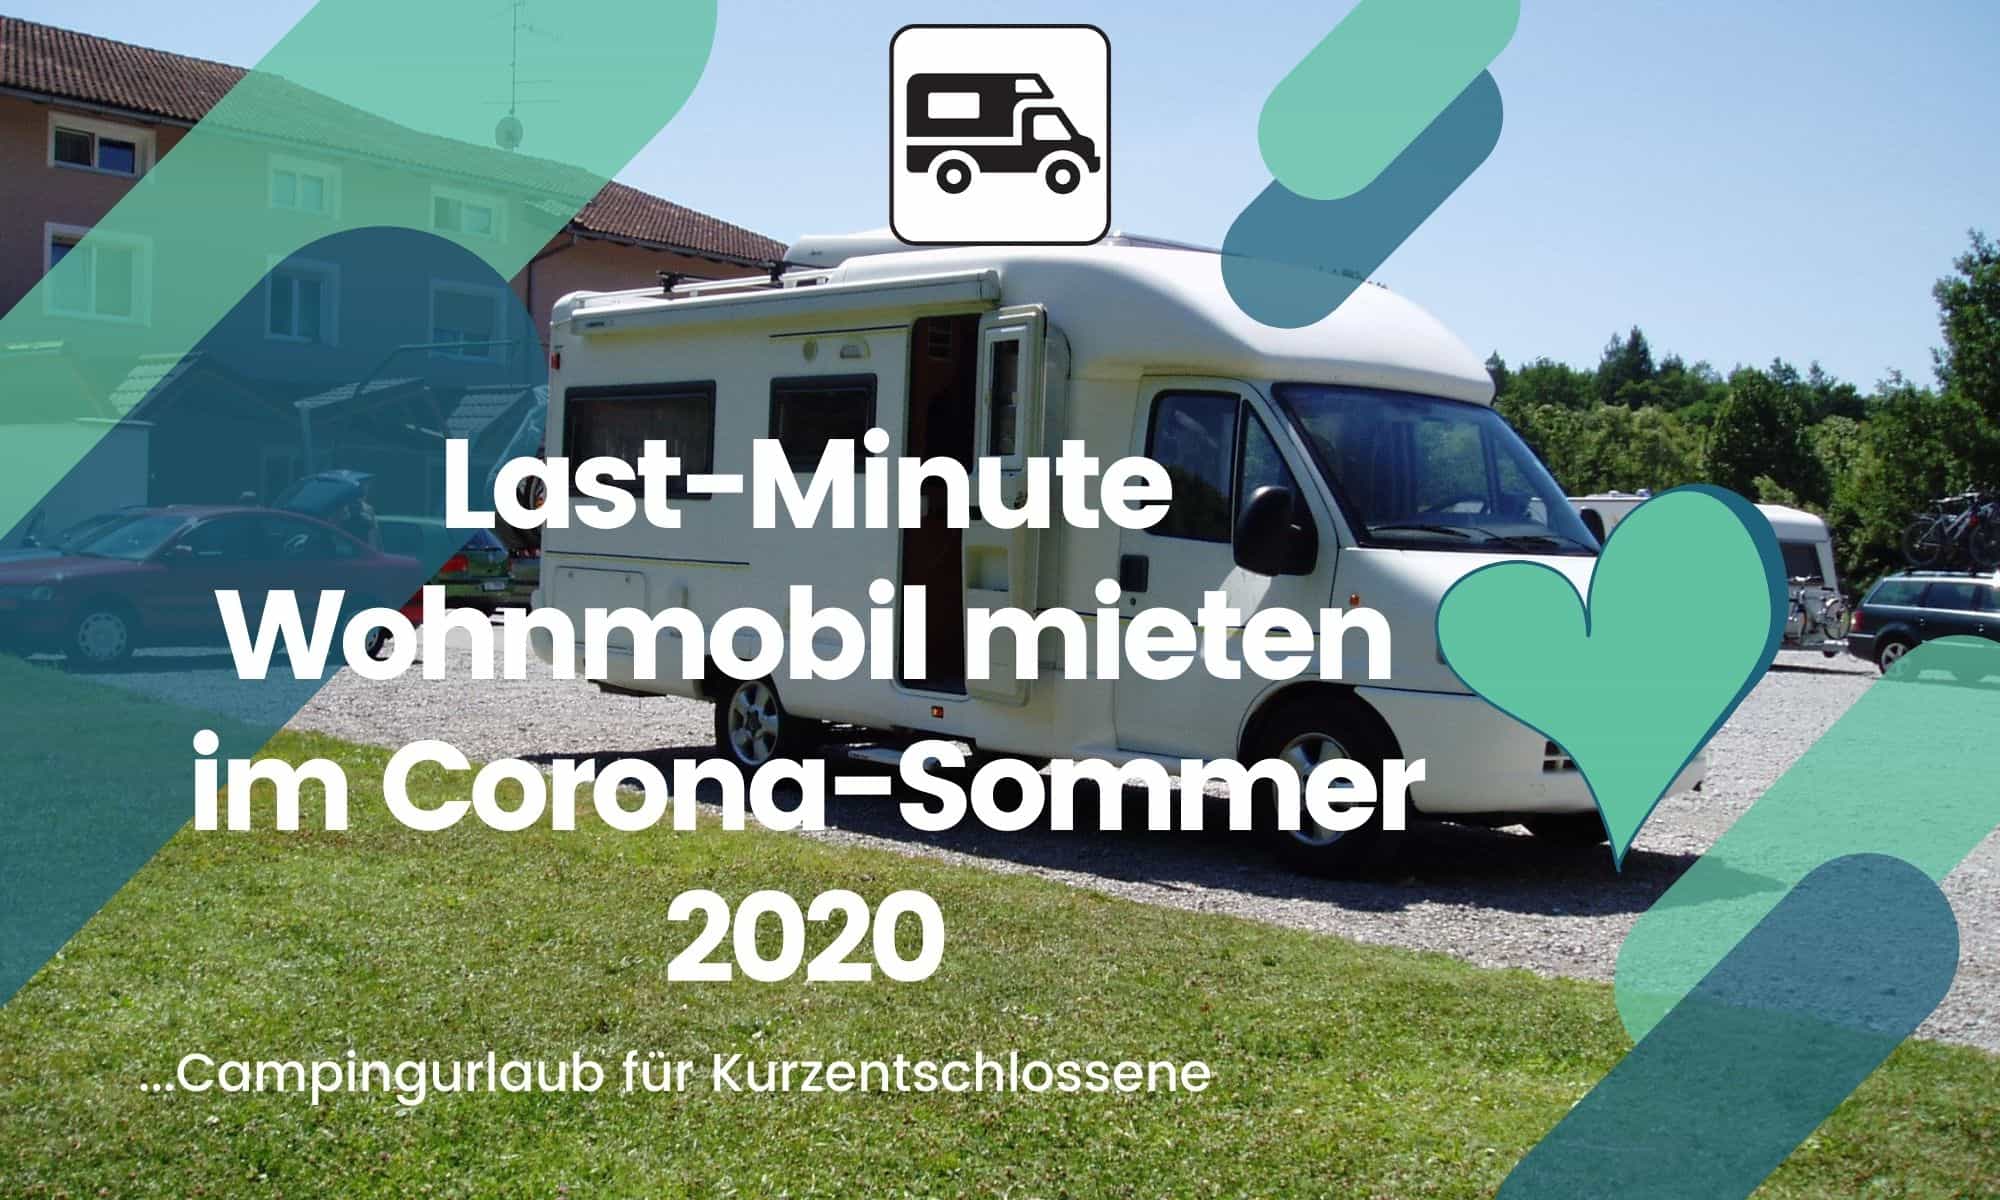 Last-Minute Wohnmobil mieten | Camping News Wochenrückblick – KW31/2020